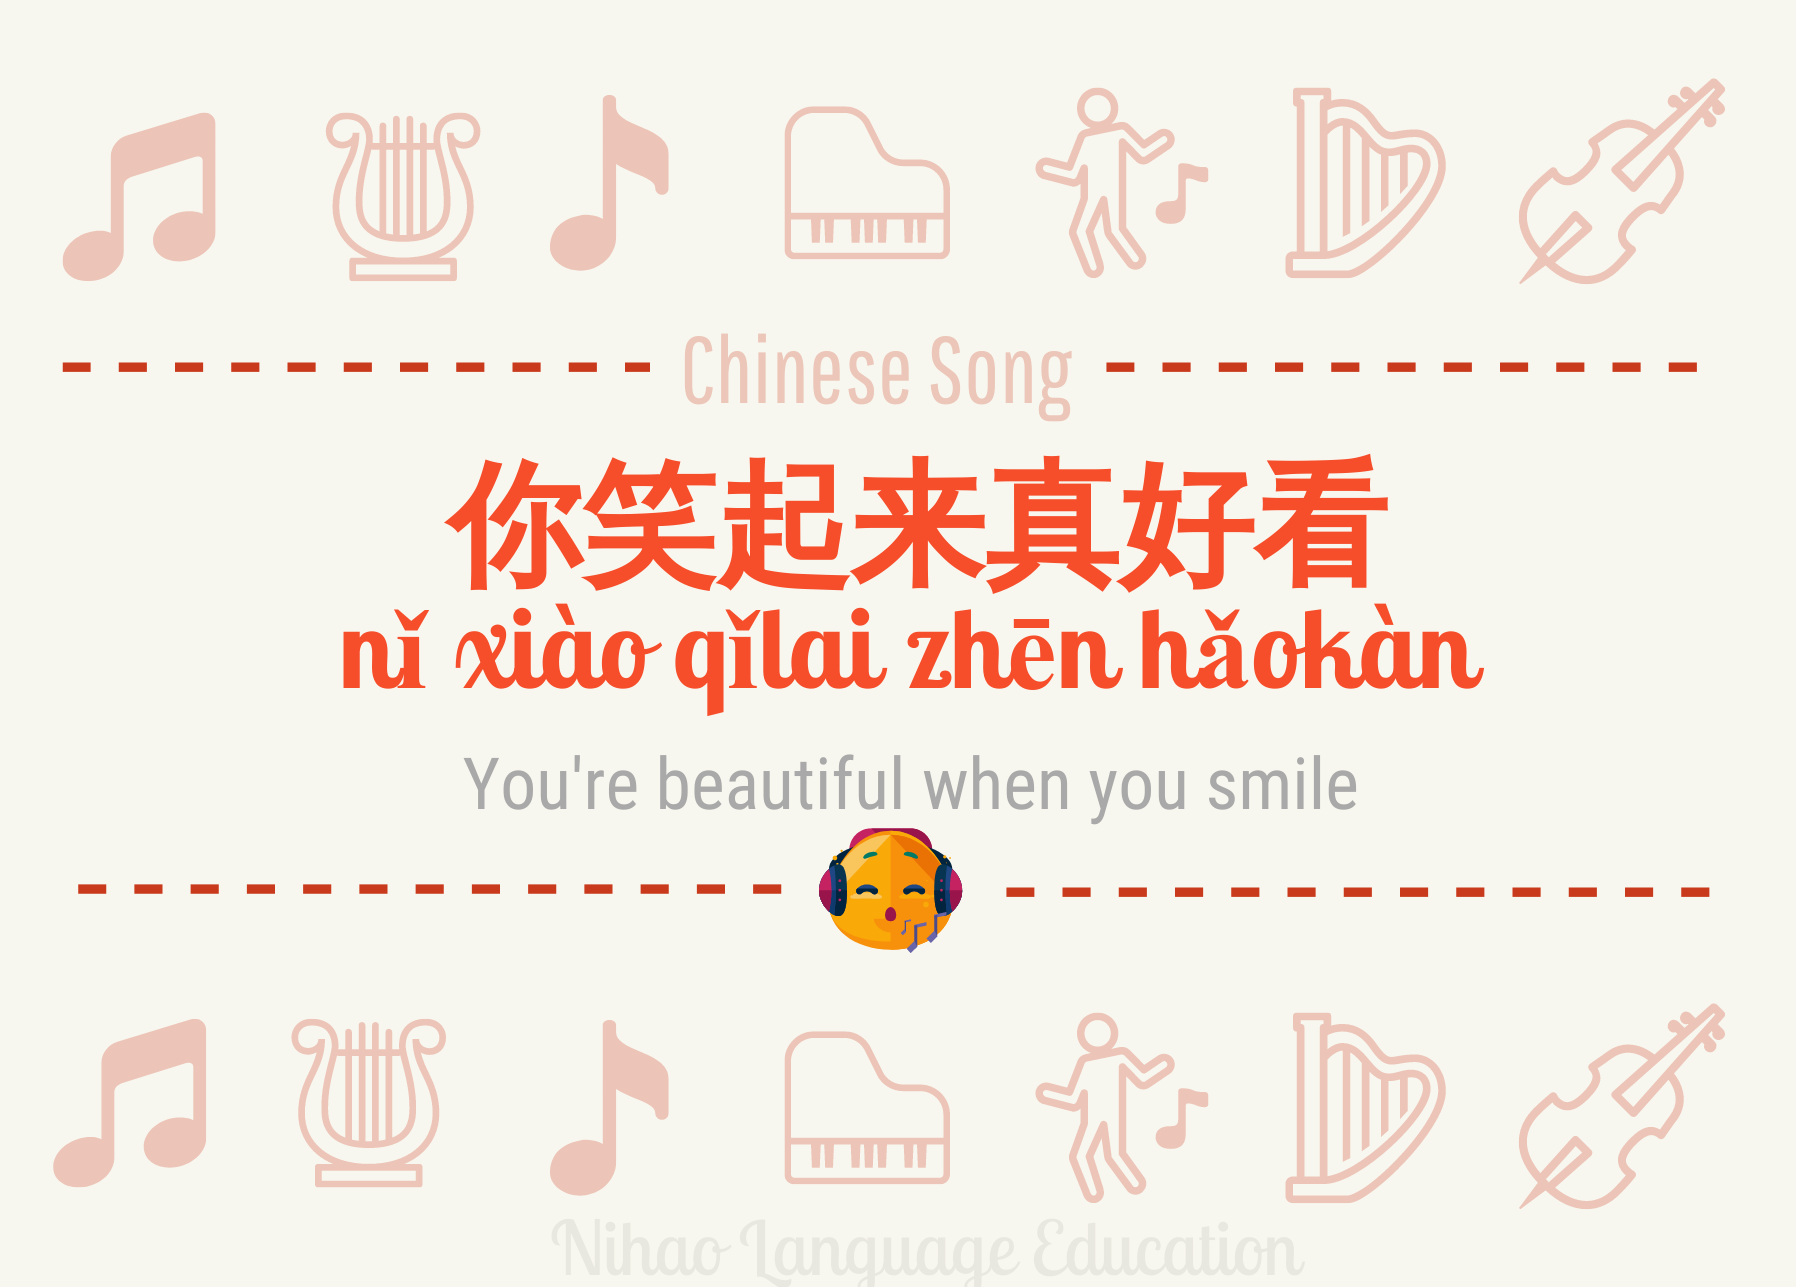 Learn Mandarin with Chinese Songs 唱中文歌学中文 | 你笑起来真好看